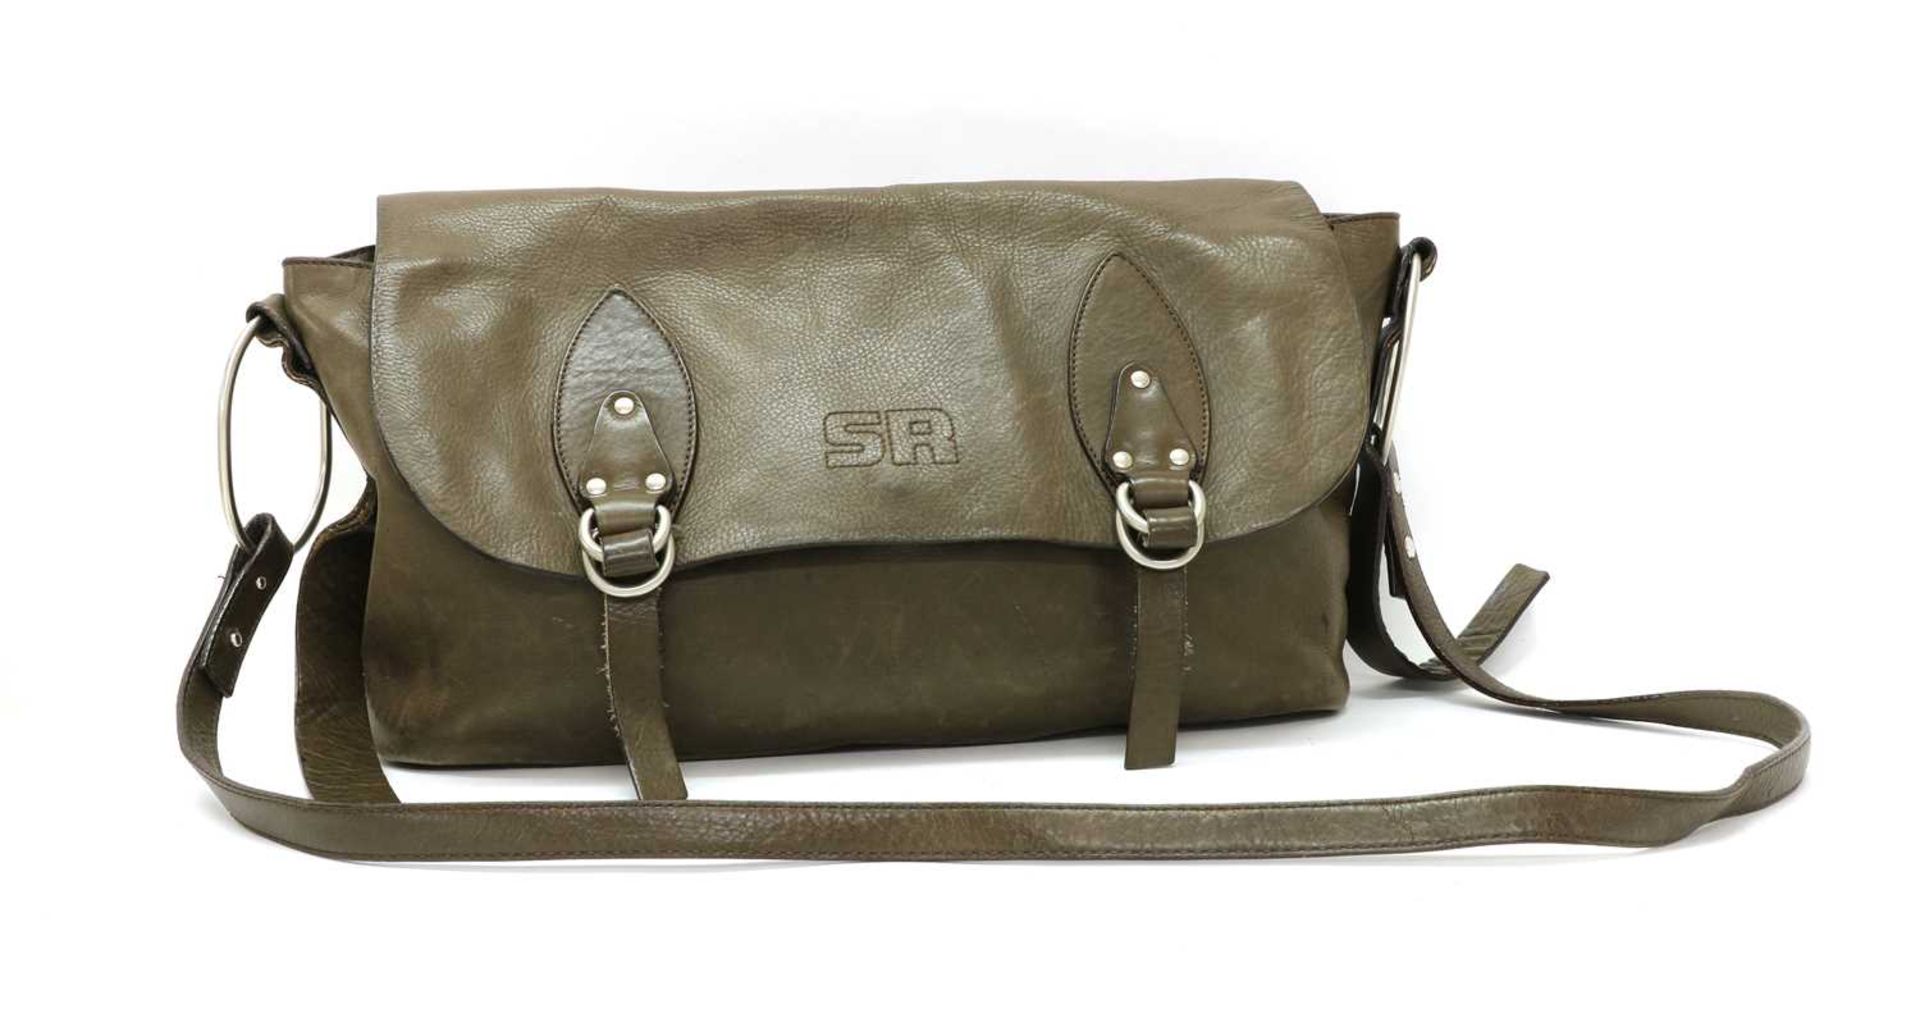 A Sonia Rykiel brown satchel bag,